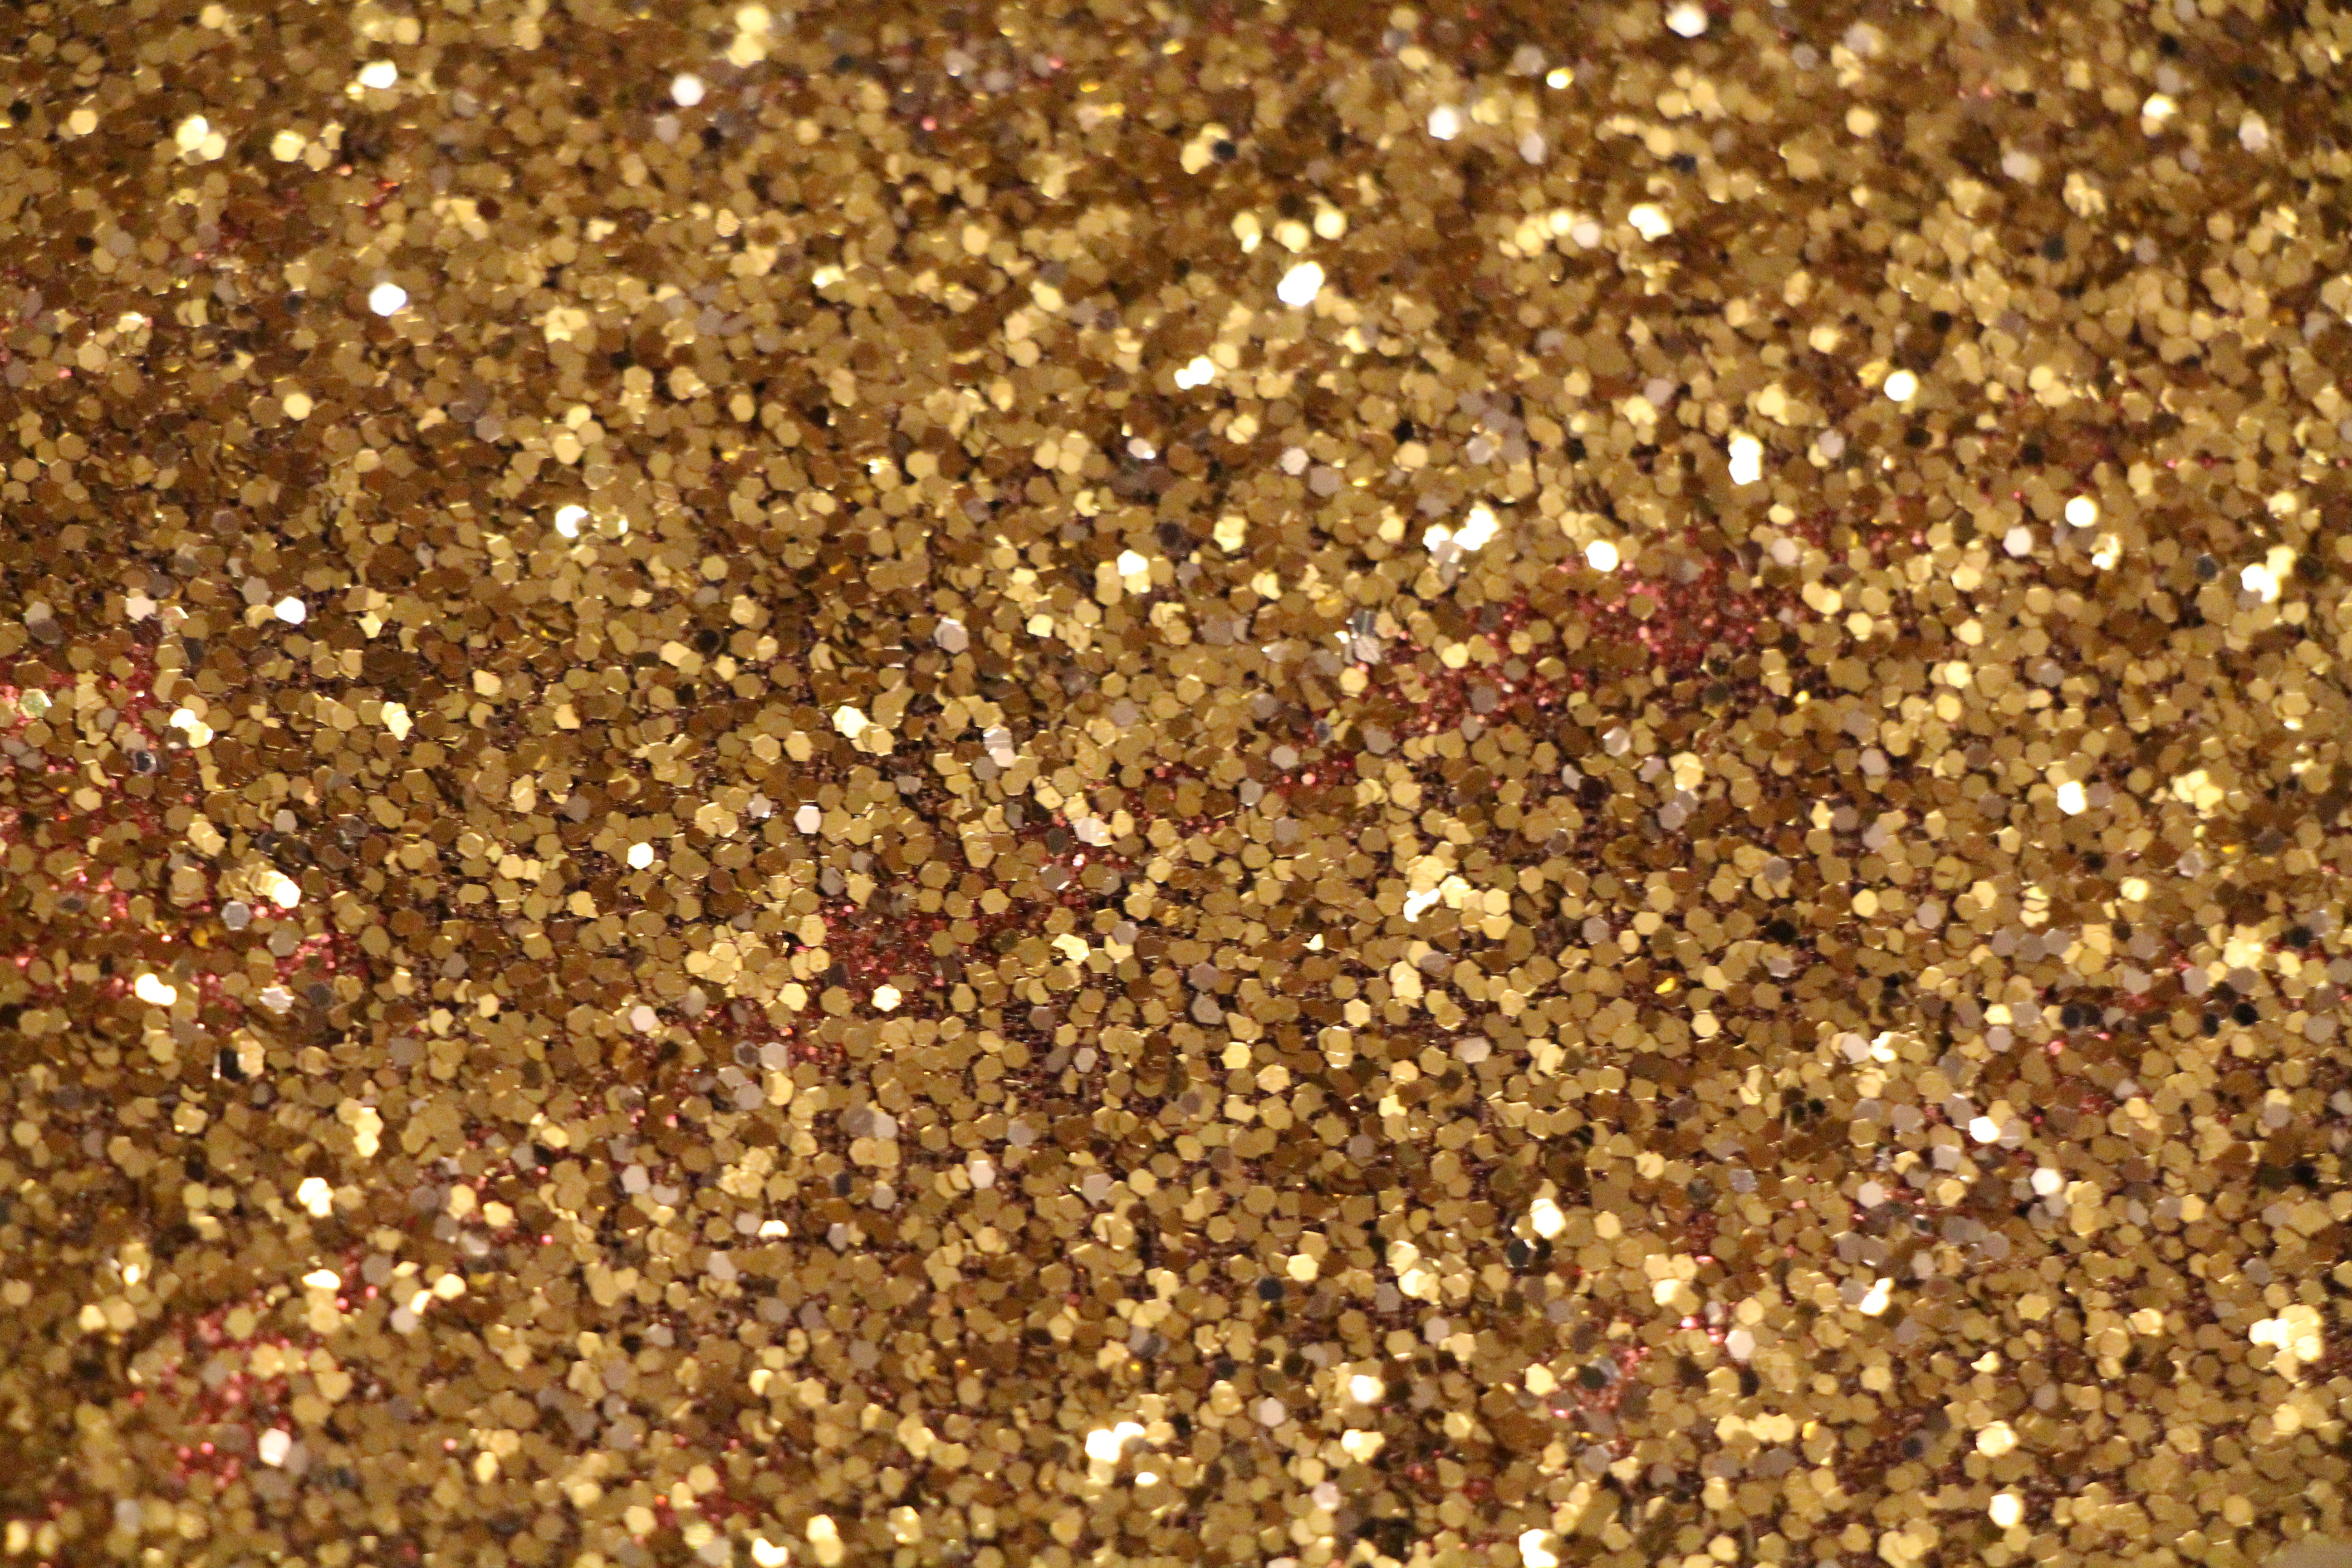  abstraction bokeh wallpaper Gold Glitter Desktop Wallpaper